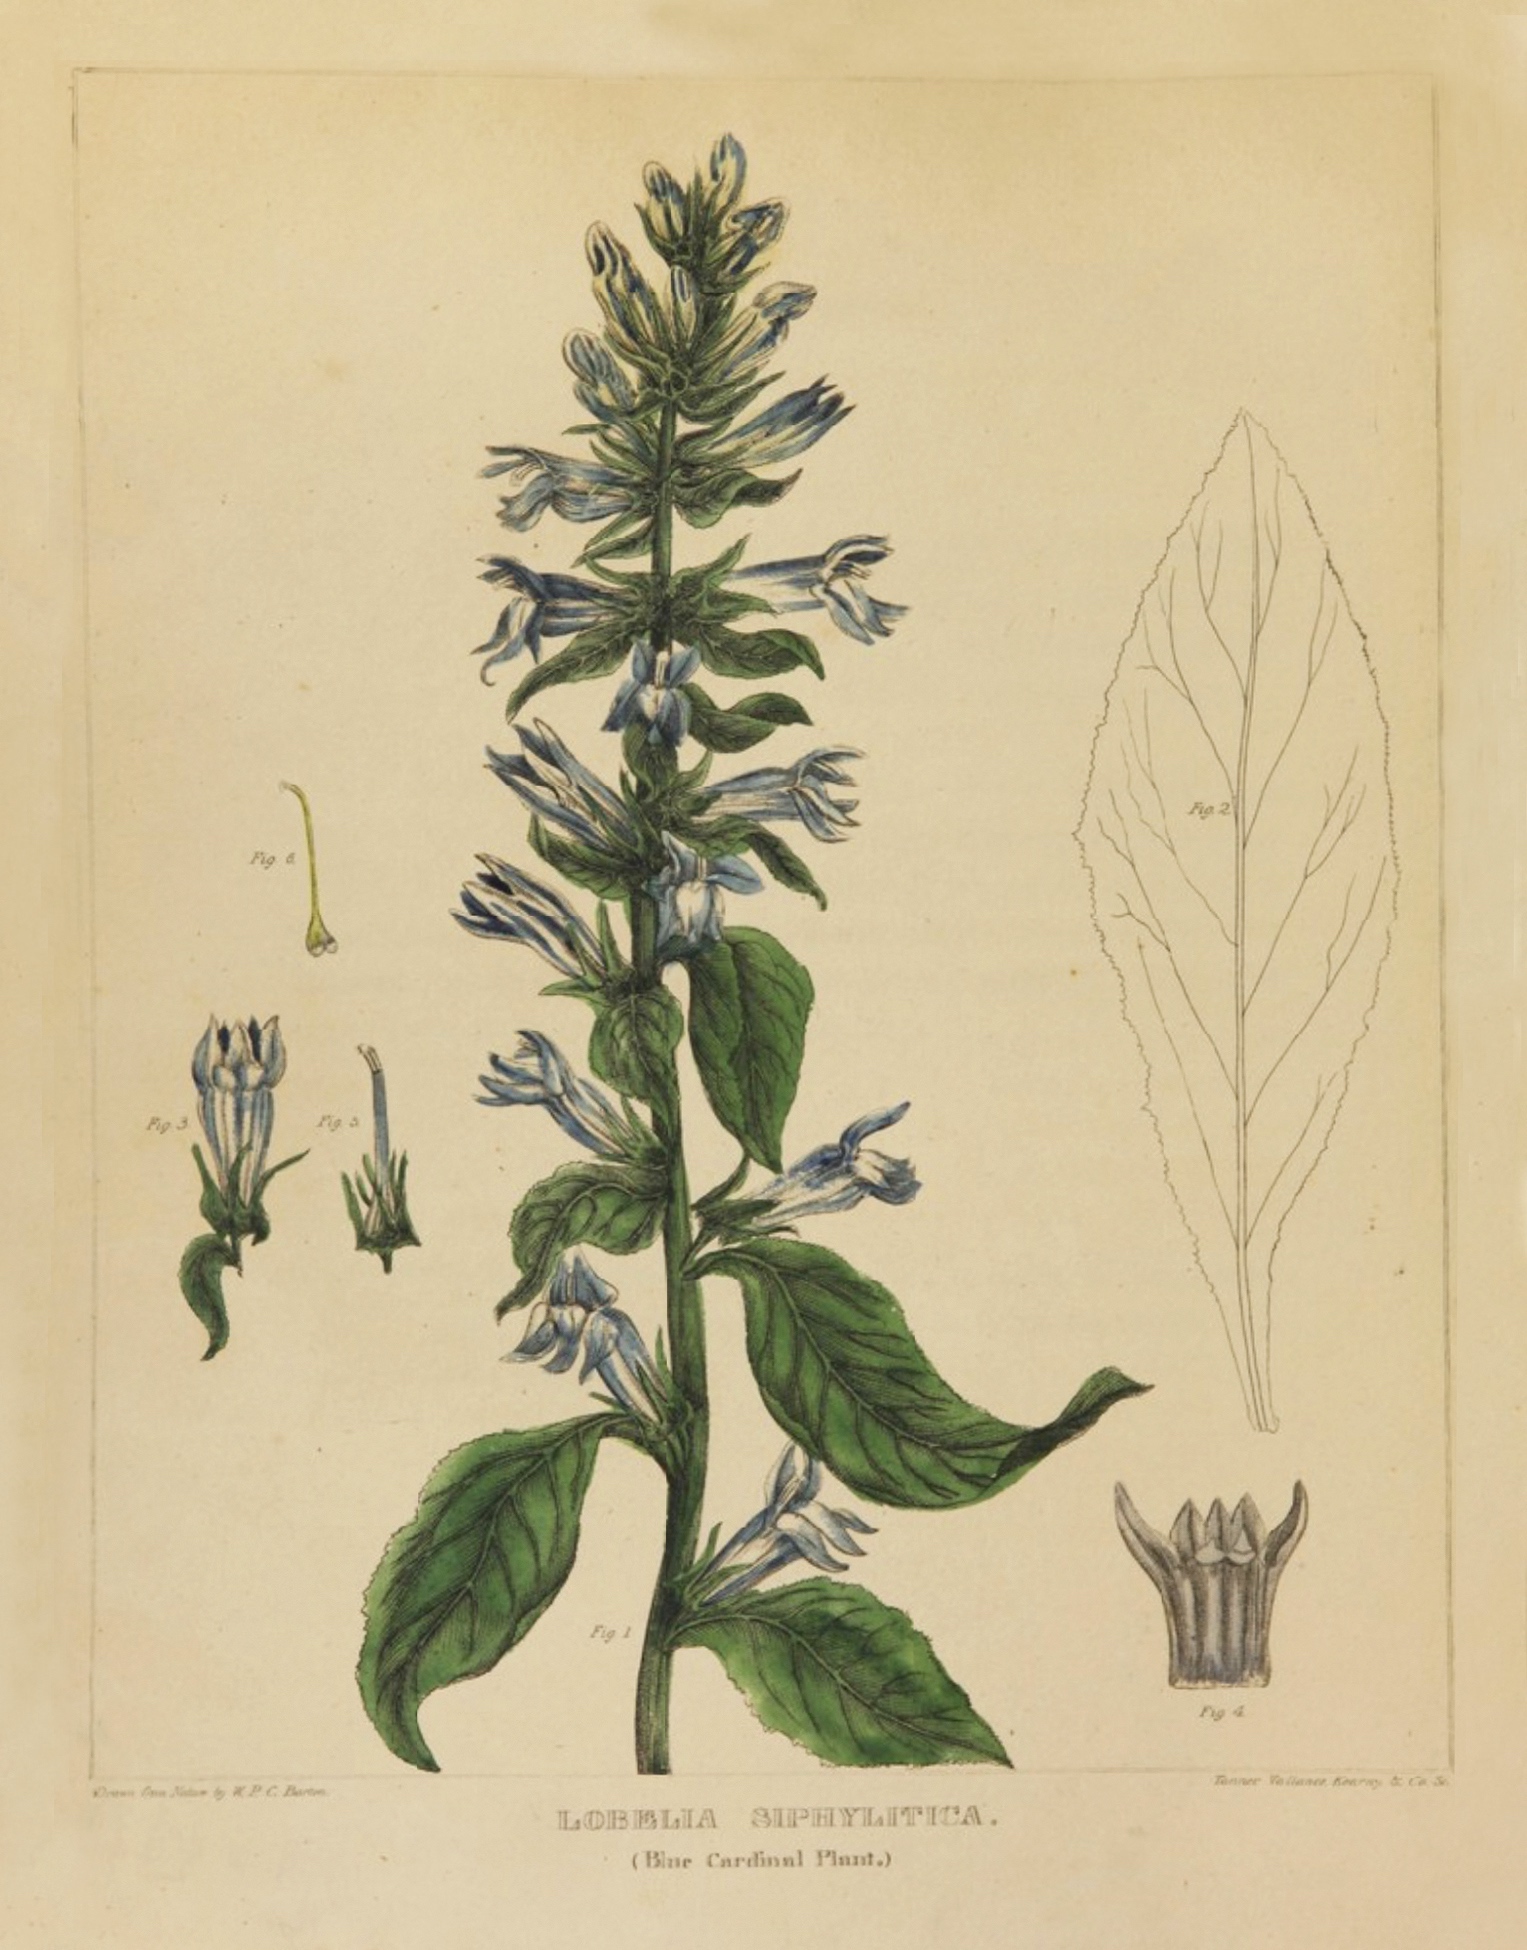 Blue Lobelia botanical illustration circa 1817-1818.